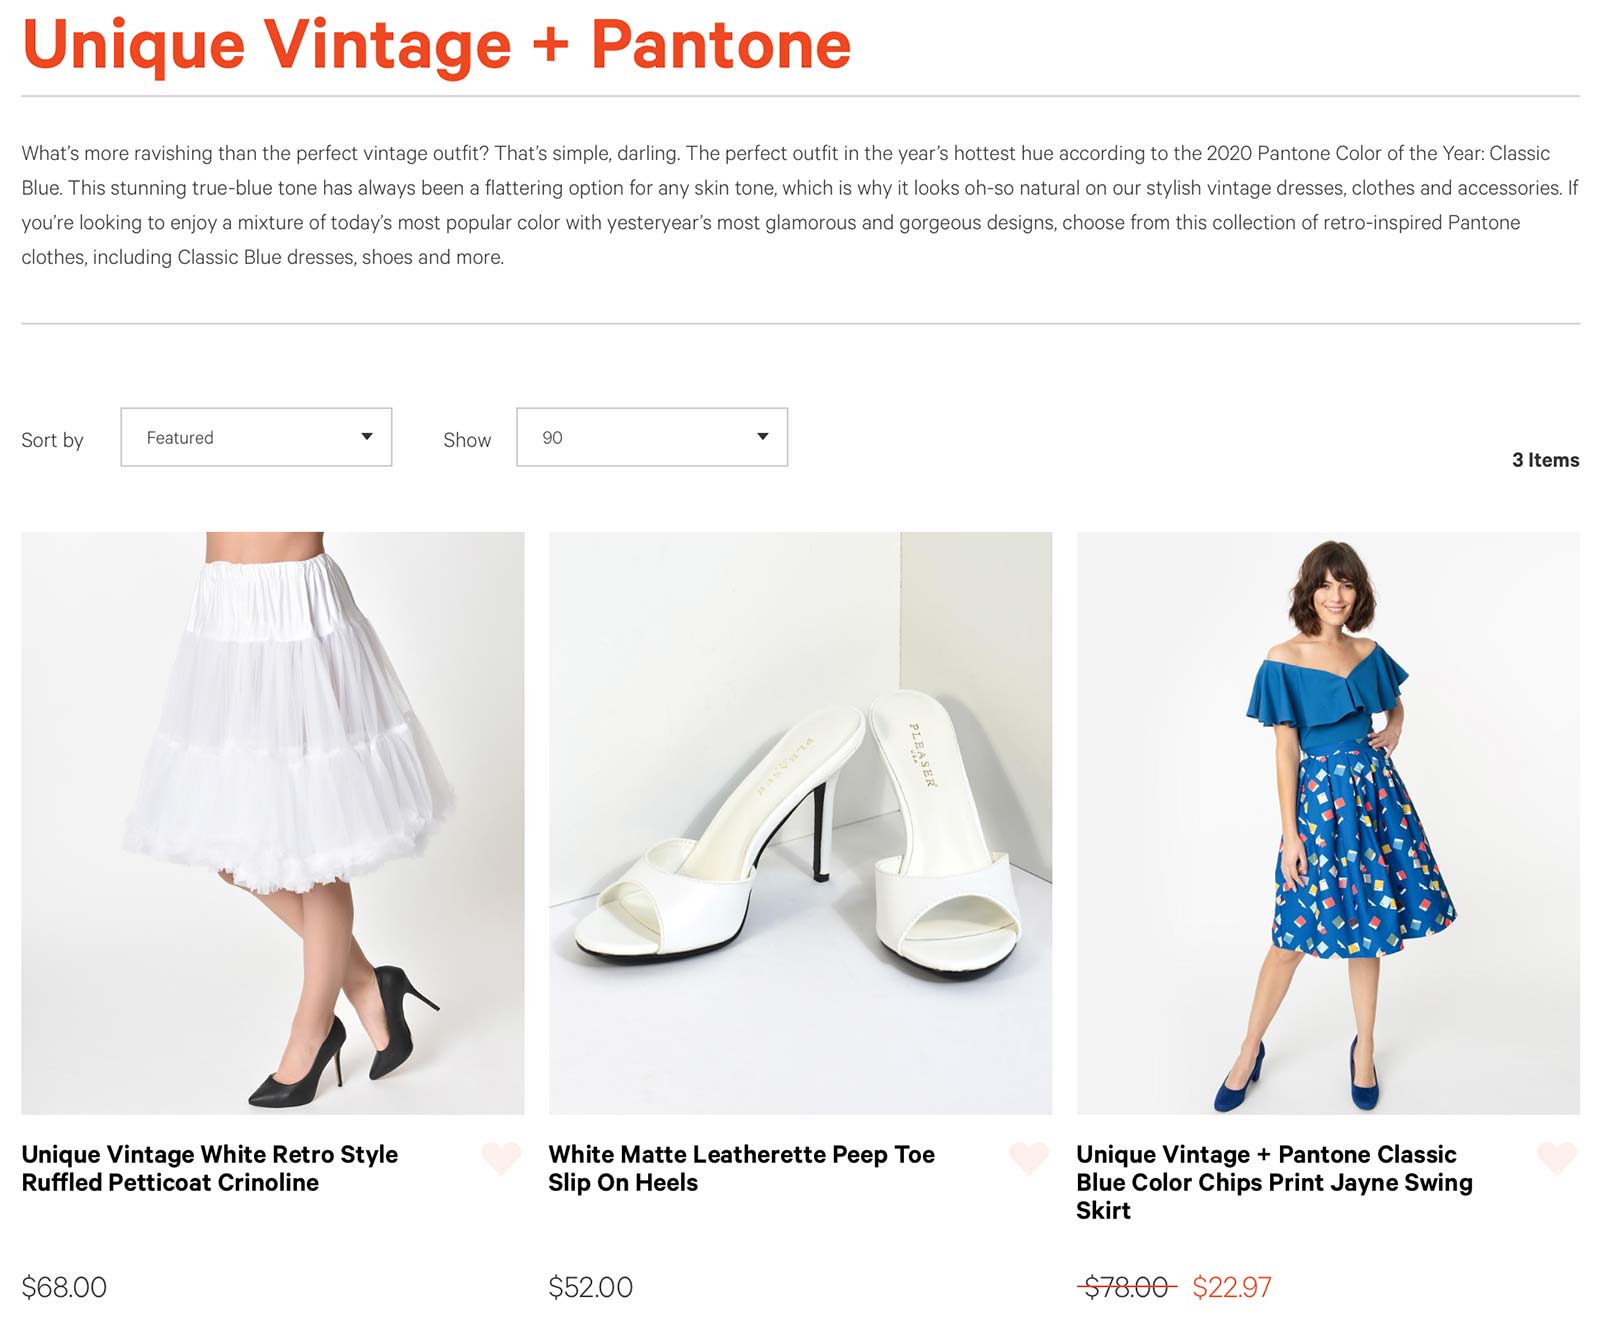 Unique Vintage store's showcase of Pantone-inspired apparel